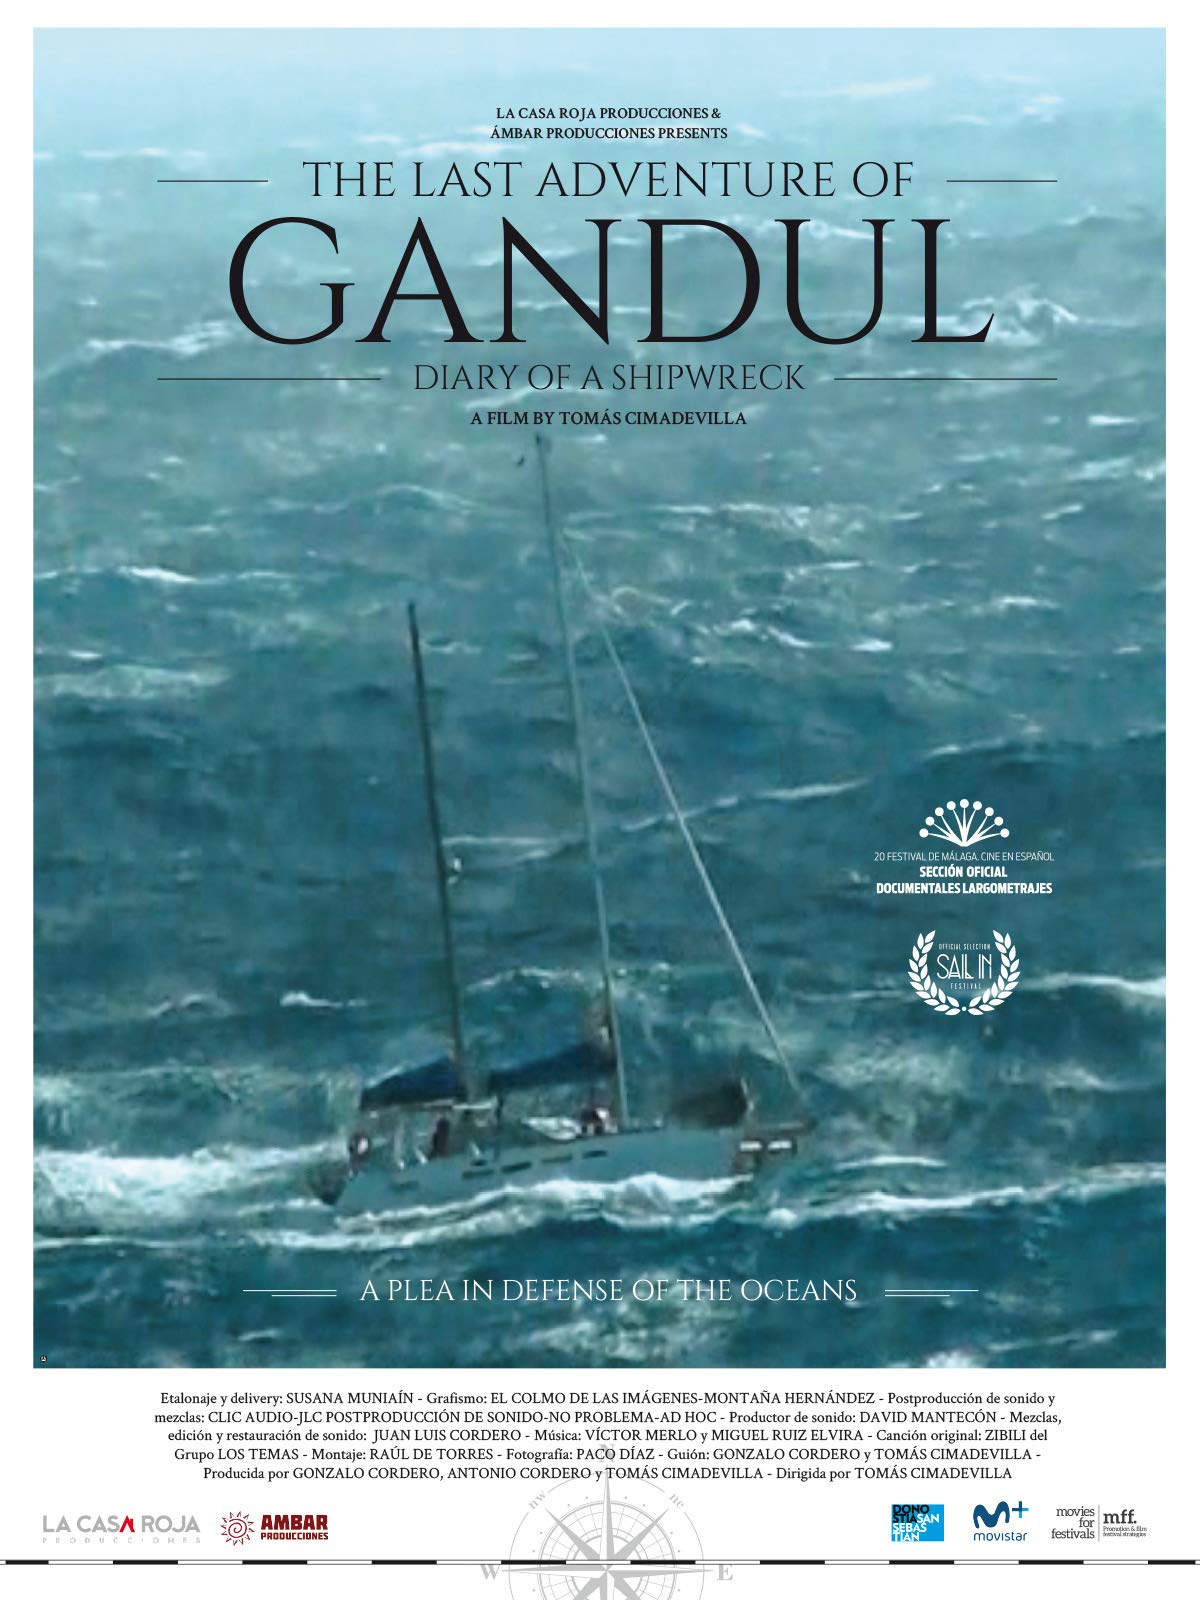 The Last Adventure of the Gandul